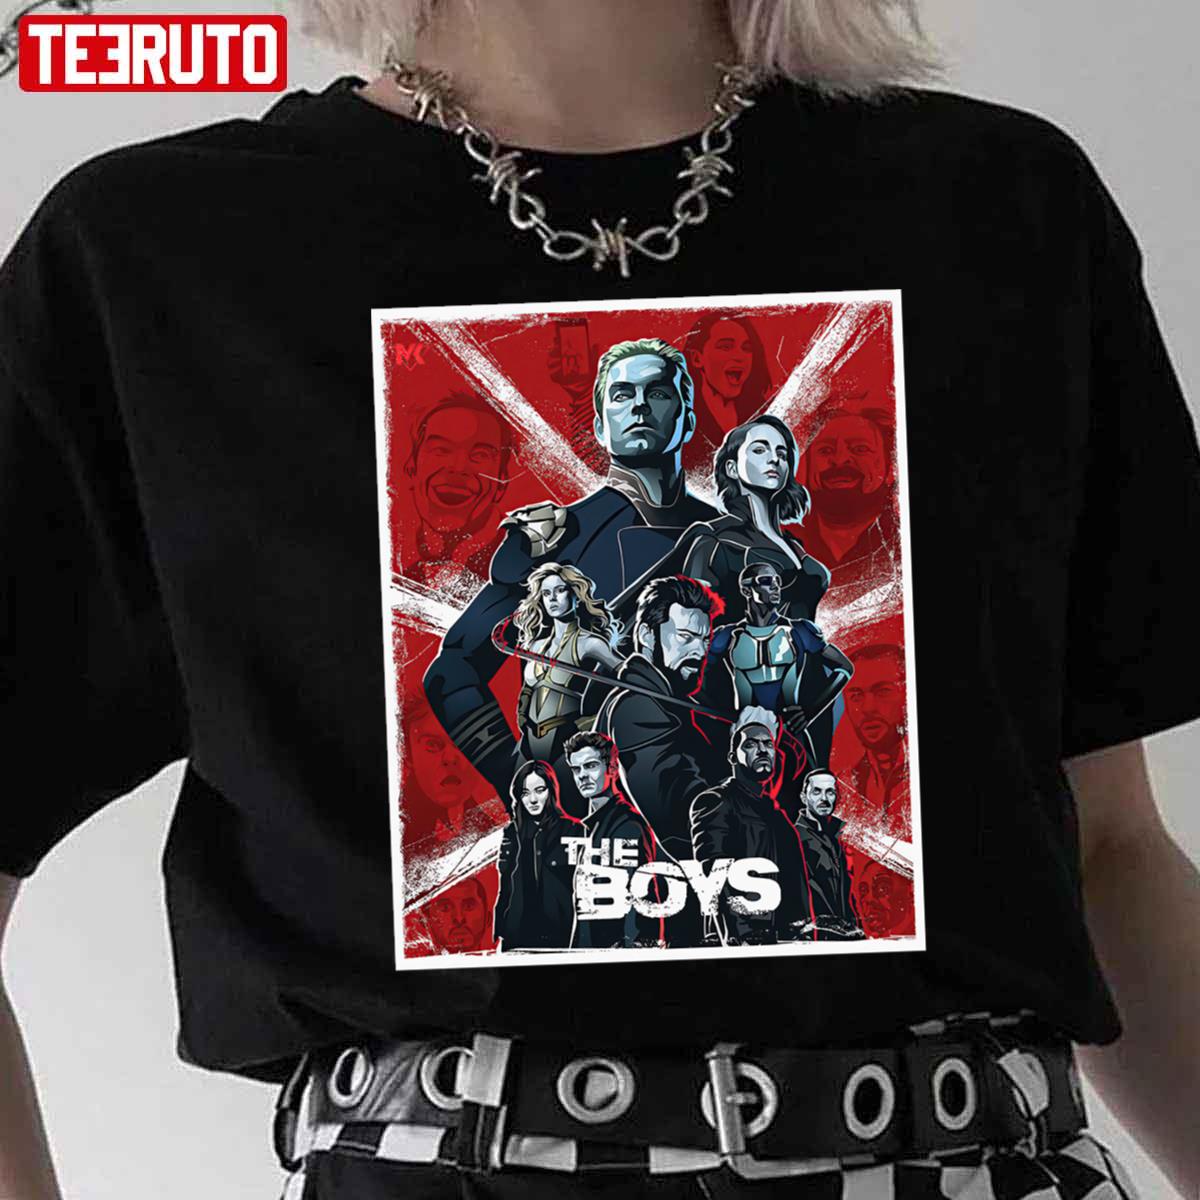 The Boys Series Unisex T-Shirt